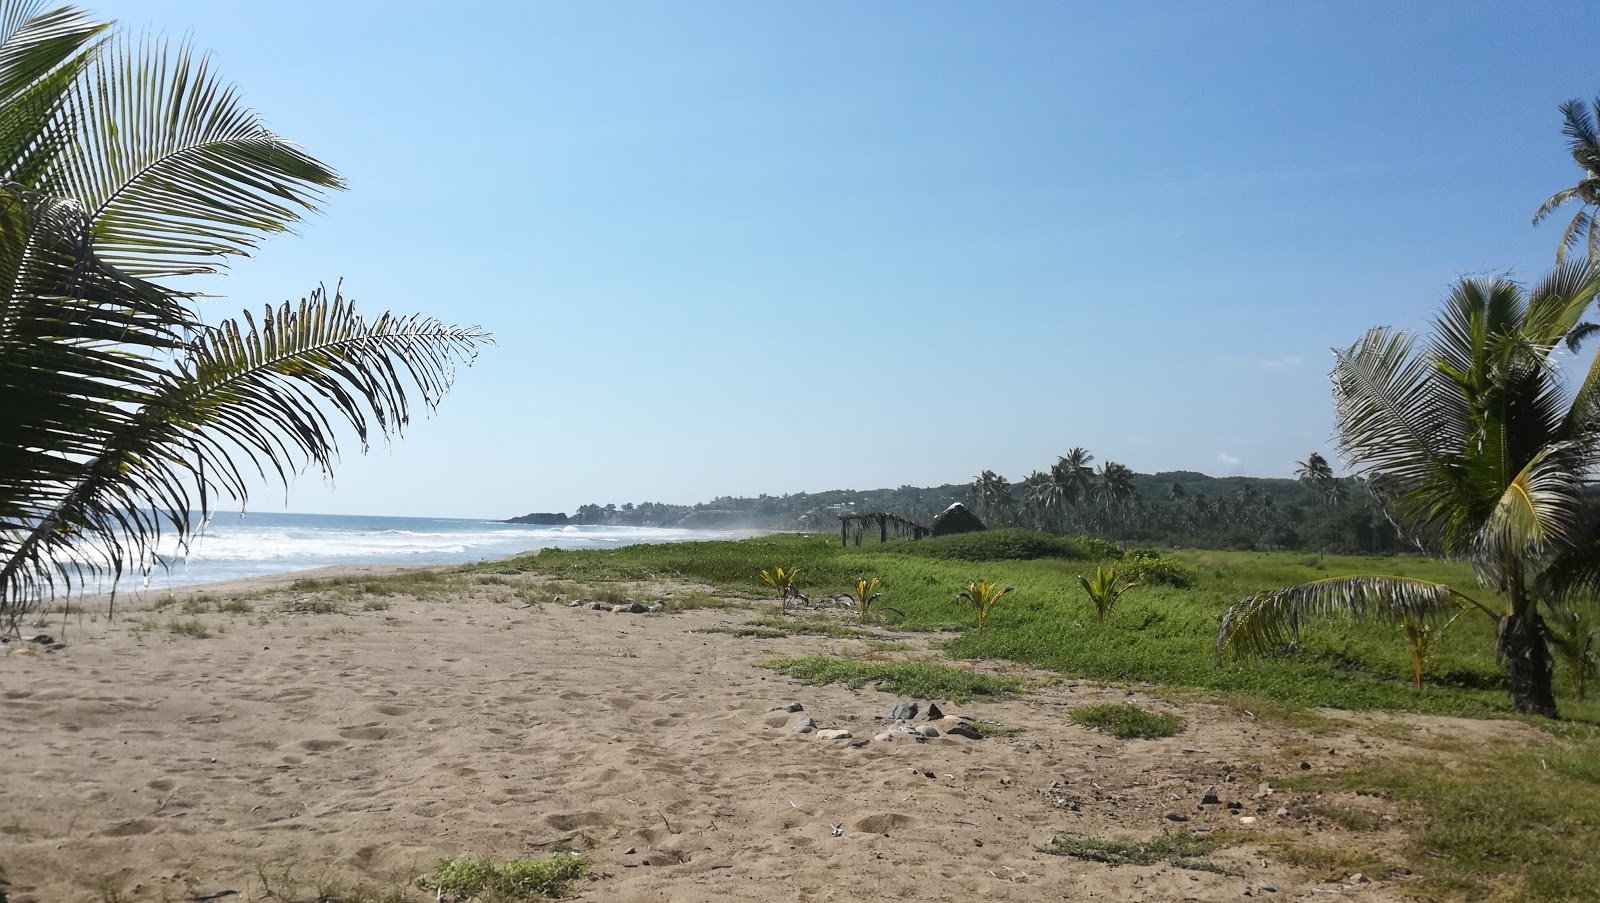 Foto av Playa Aguila med brunsand yta